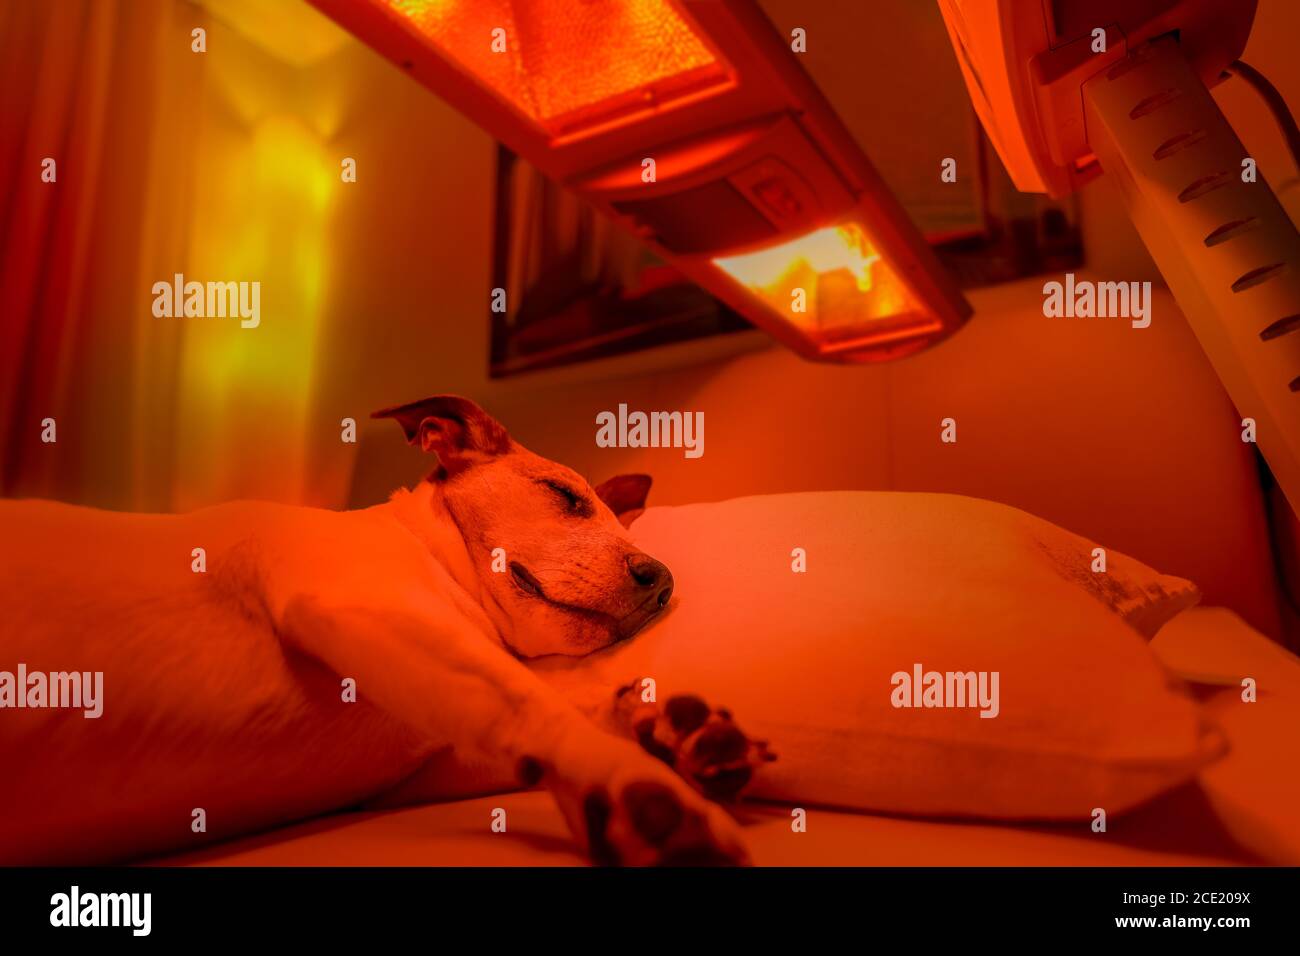 Rotlicht Therapie Hund Stockfotografie - Alamy